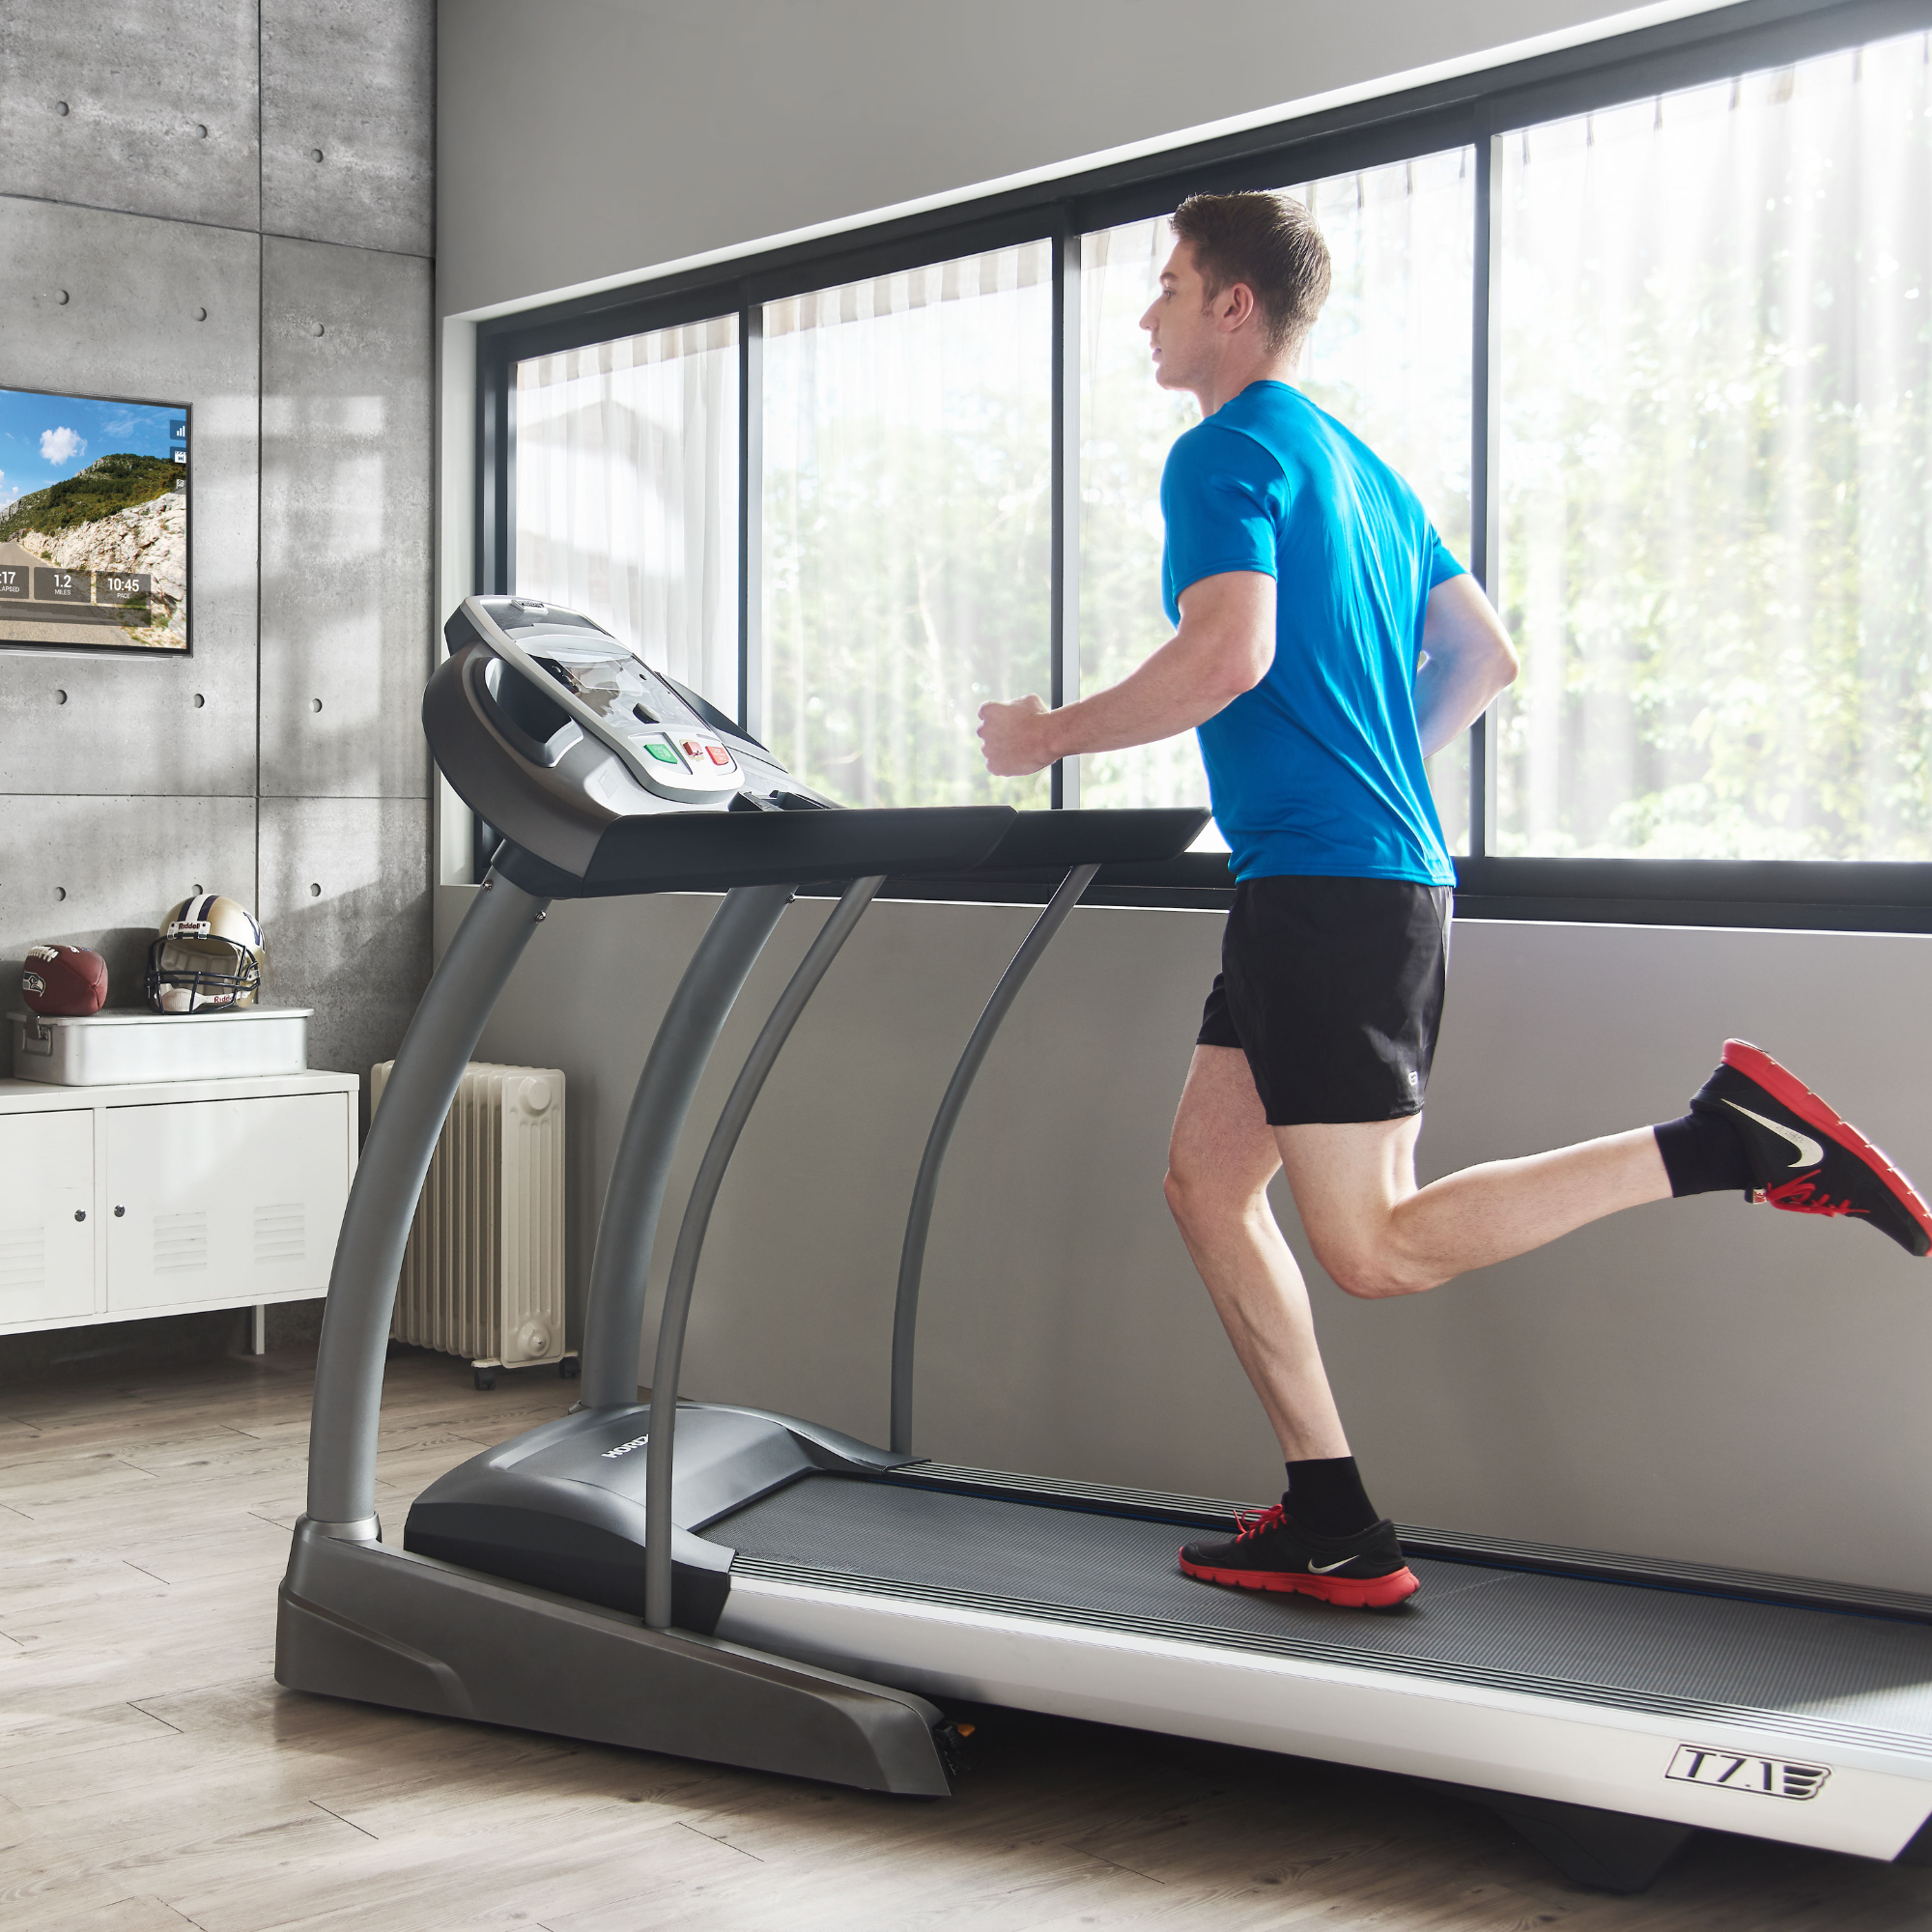 Horizon Elite T7.1 Treadmill with Free Installation - Black Friday Sale - uk.johnsonfitness.com